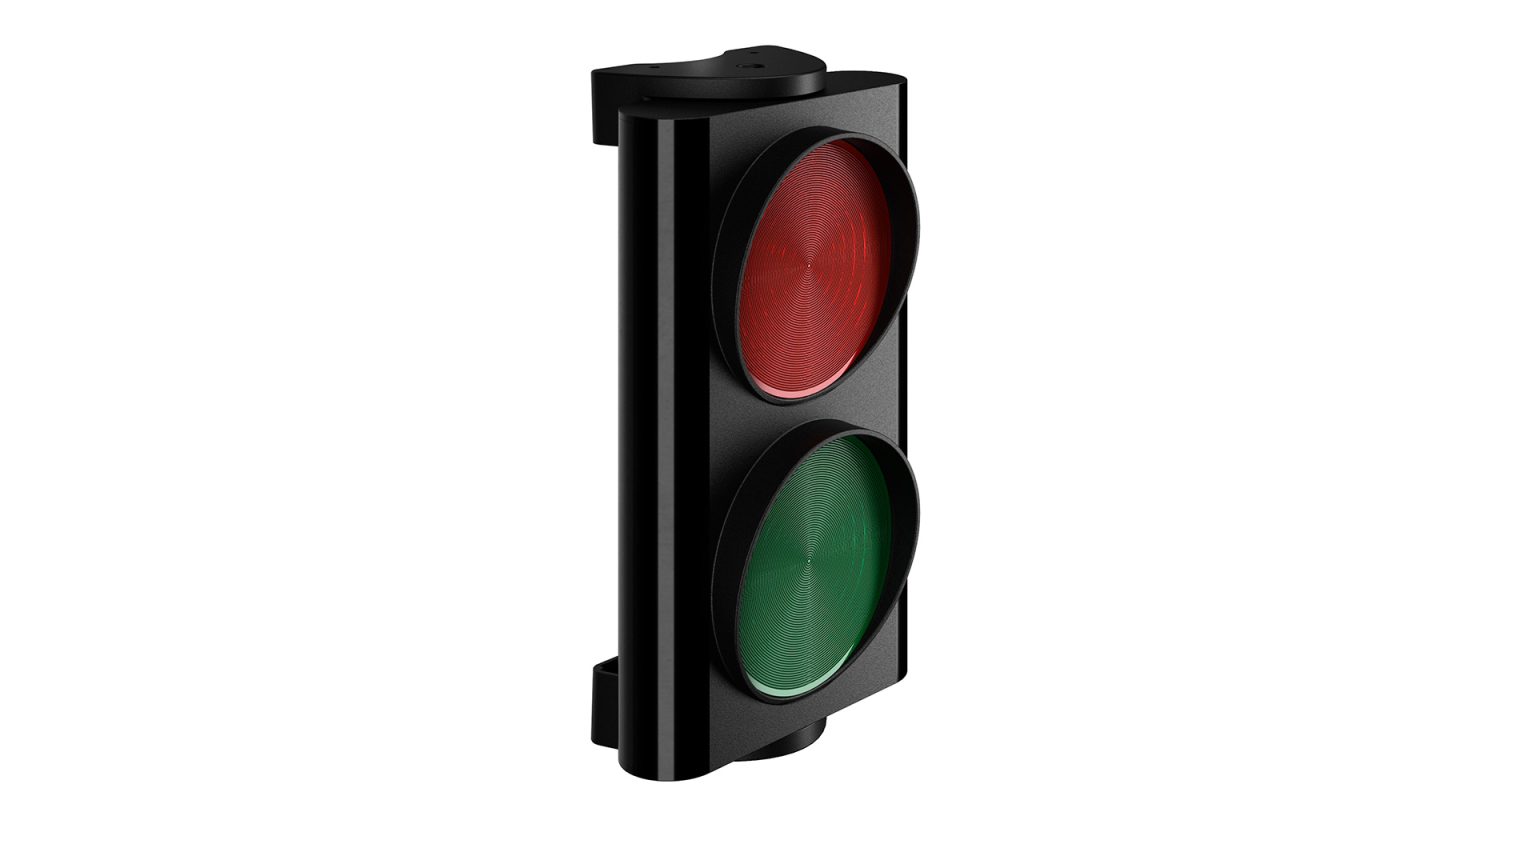 era80-semaforo-luce-rossa-e-verde-verticale-3